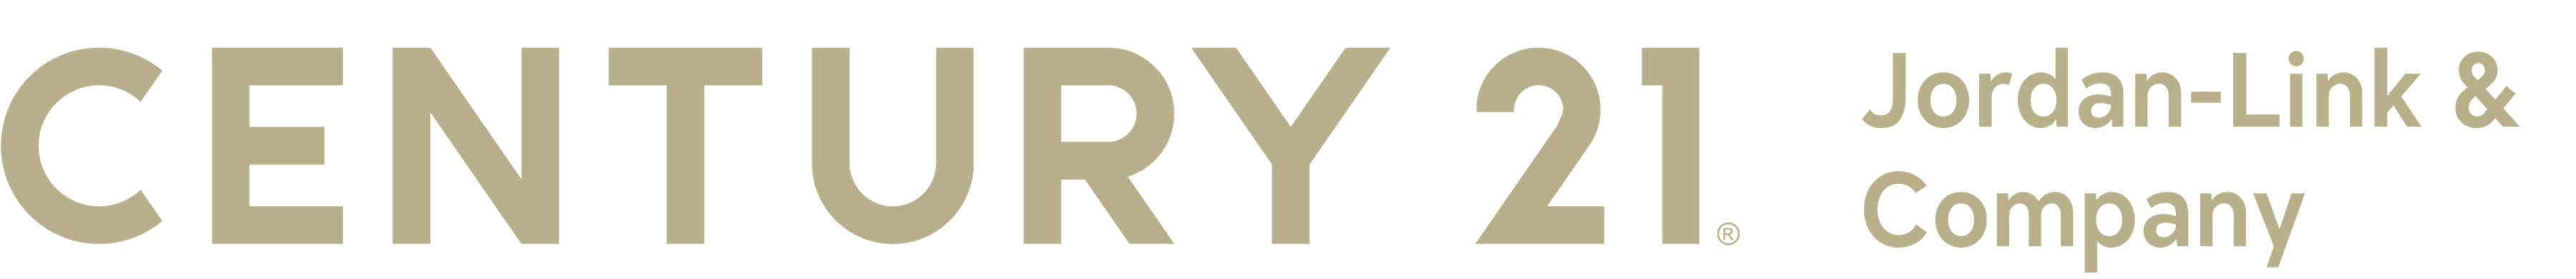 century 21 residential logo